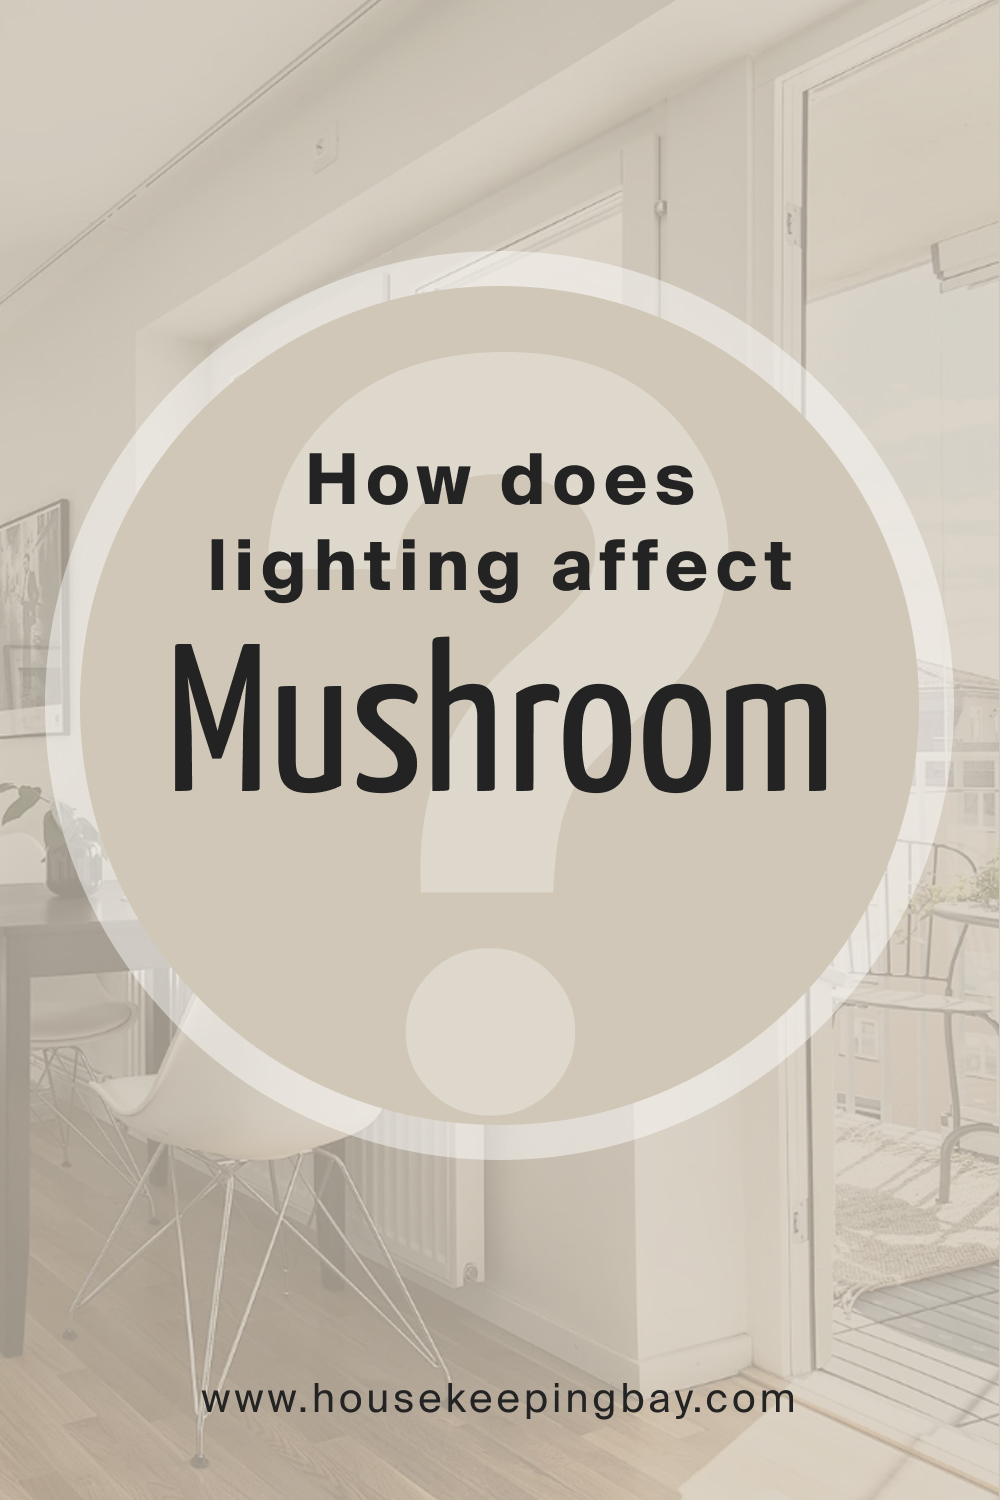 How does lighting affect SW Mushroom